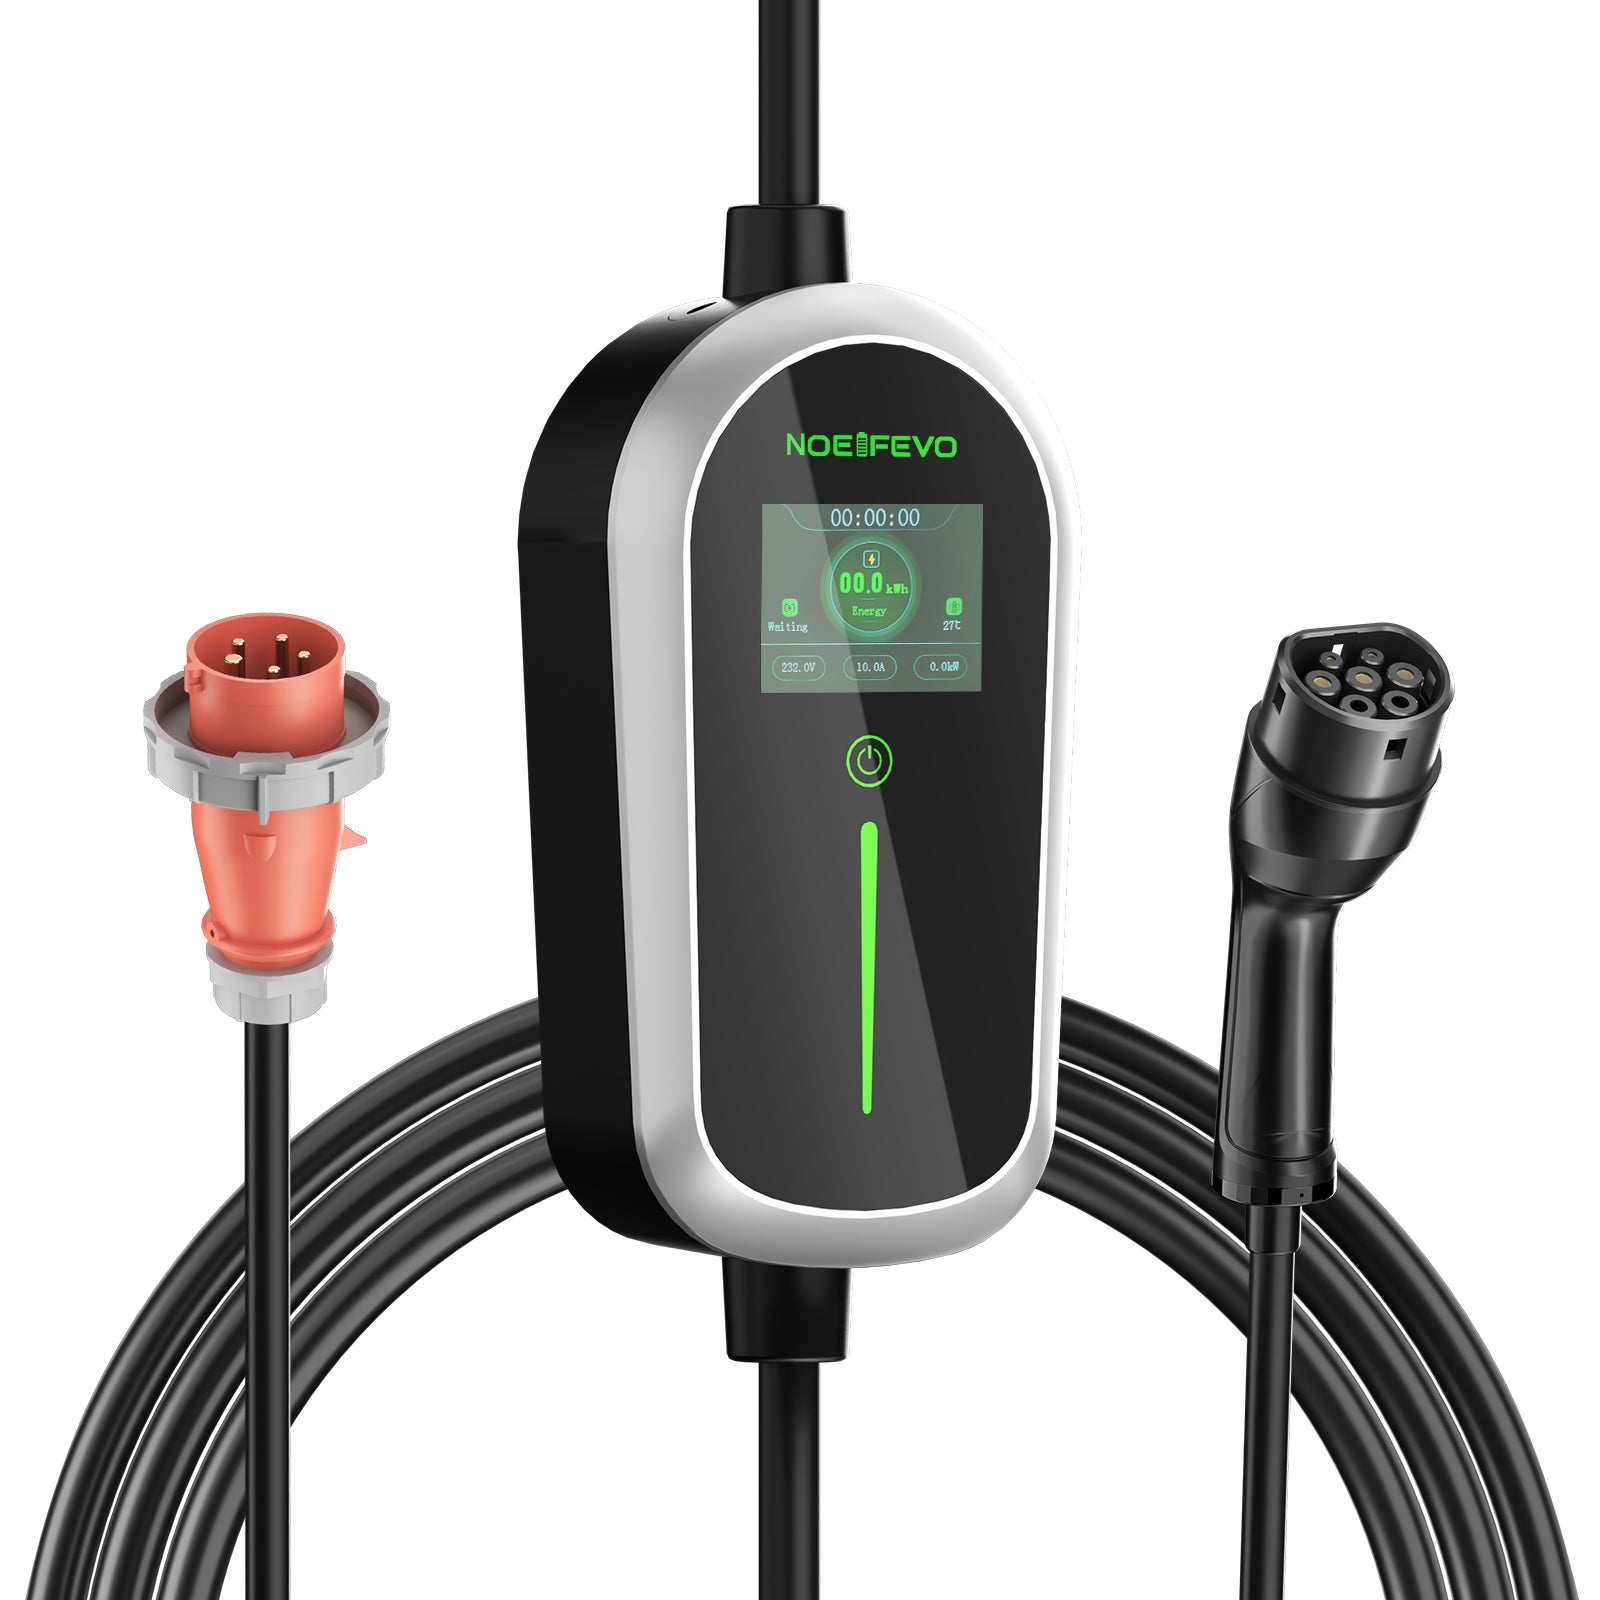 11KW EV Charging Station, 16A 3 Phase Type 2 Mobile Charger for Electr –  Smart LifePO4 Batterie & Heimspeicherung von Energie & Intelligentes  Ladegerät